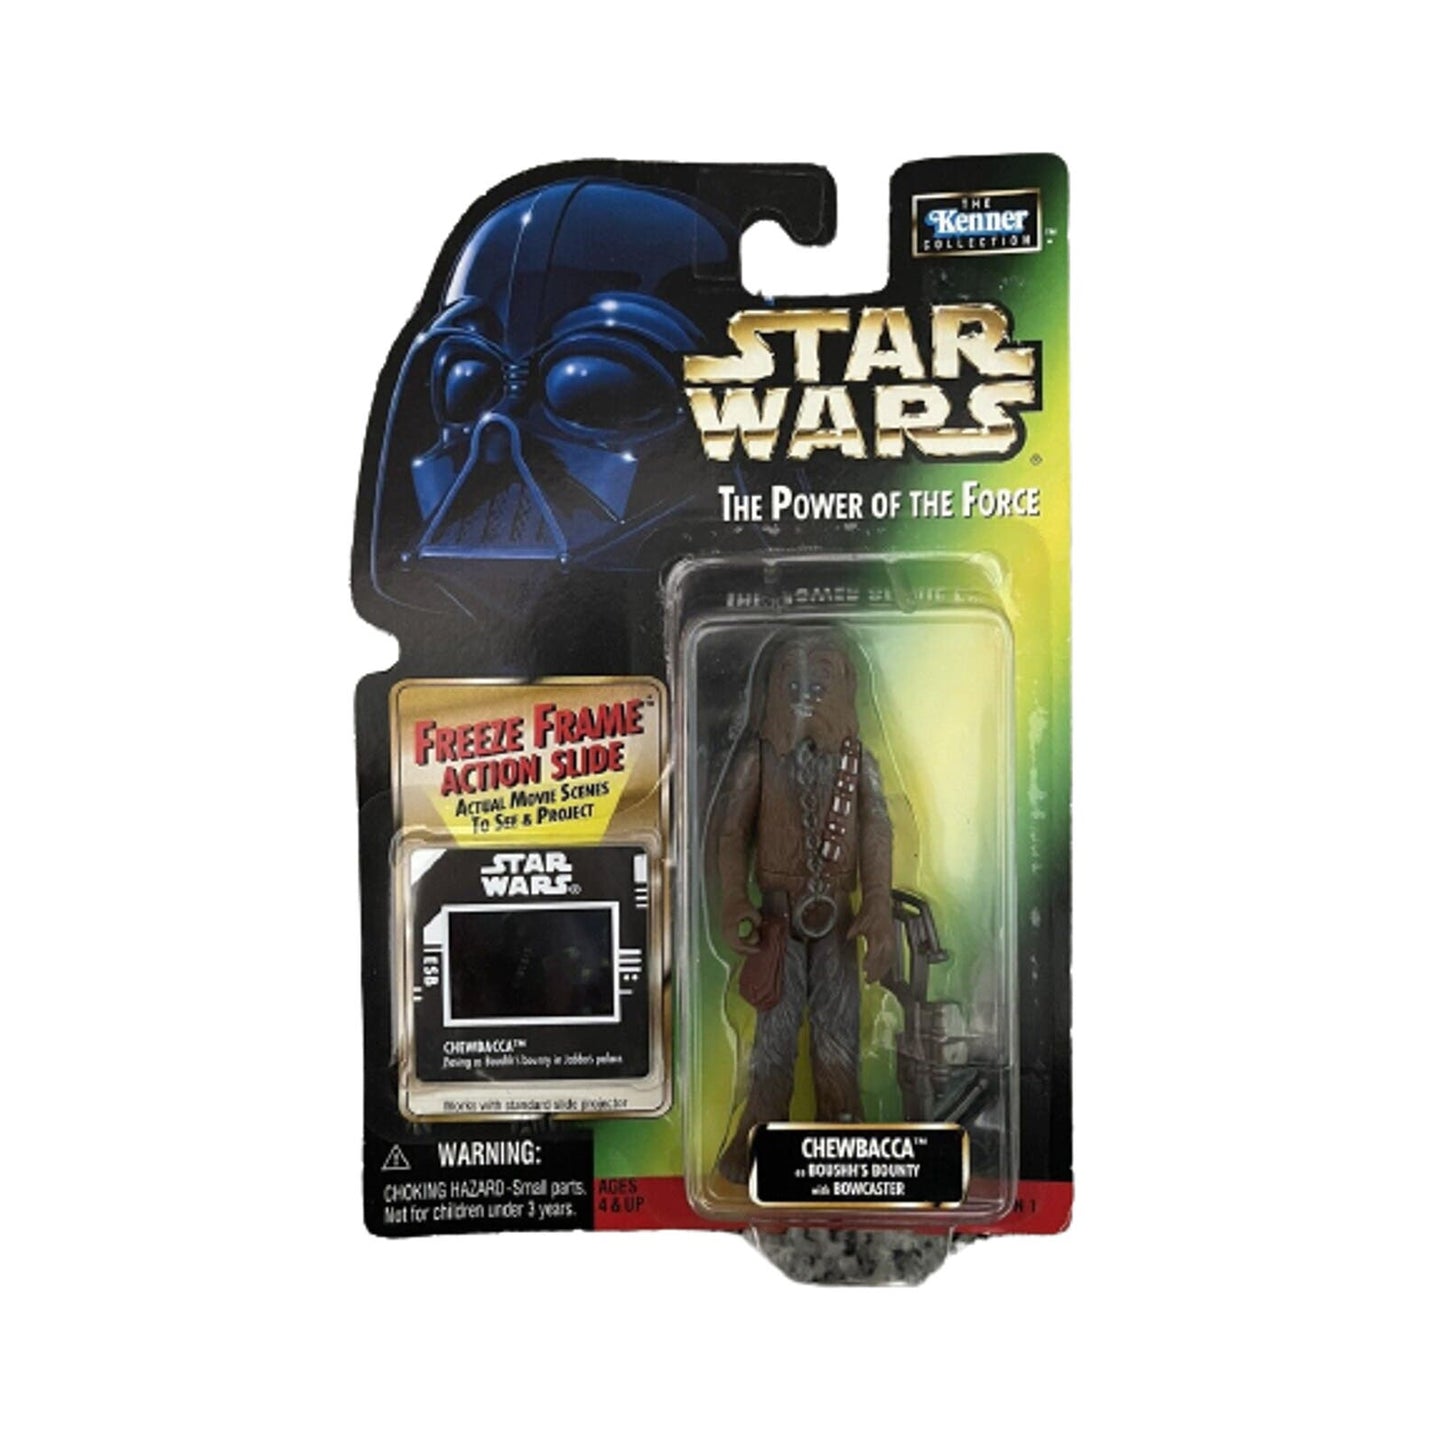 Set of 5 Vintage '90s Star Wars Toys NIP - Luke, Anakin, Chewbacca, Leia SEALED